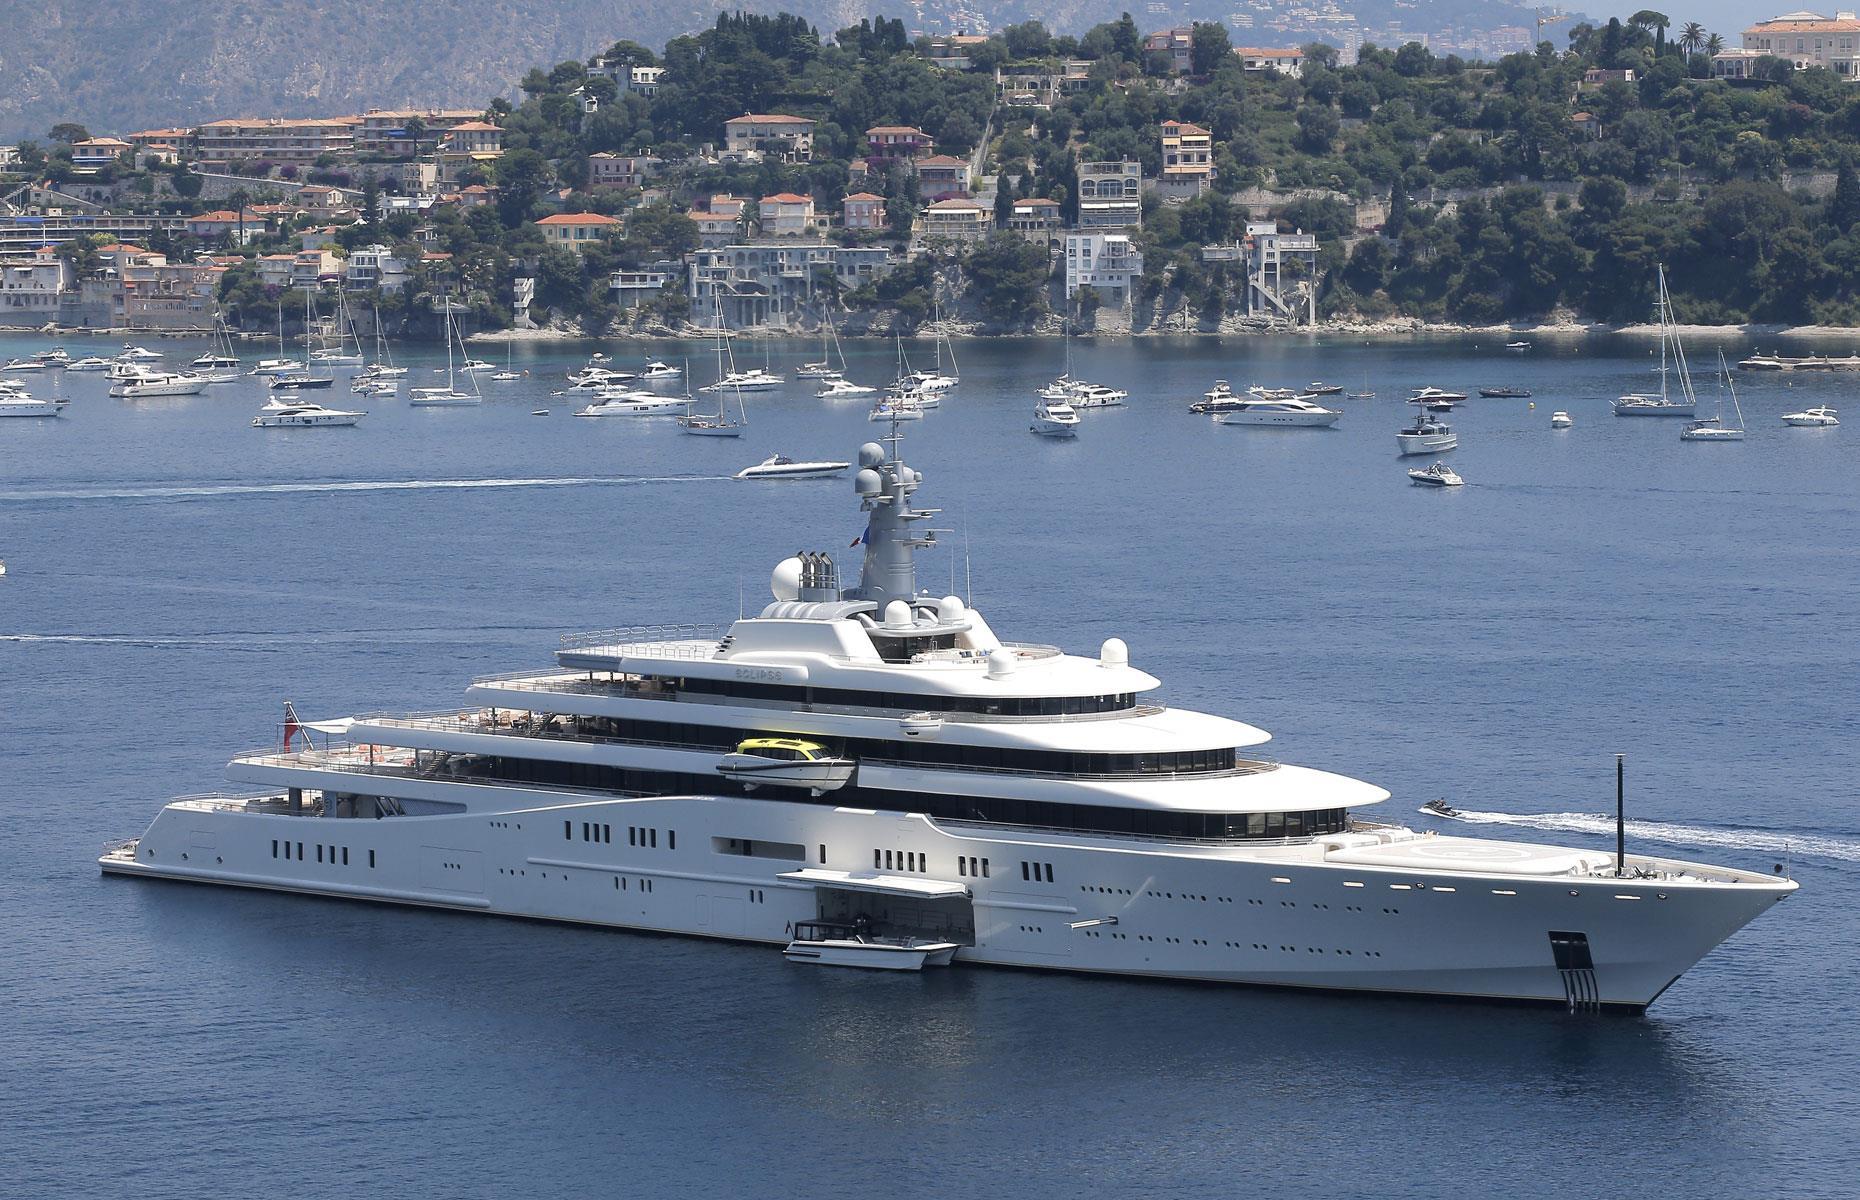 Boat: $472 million (£378m)